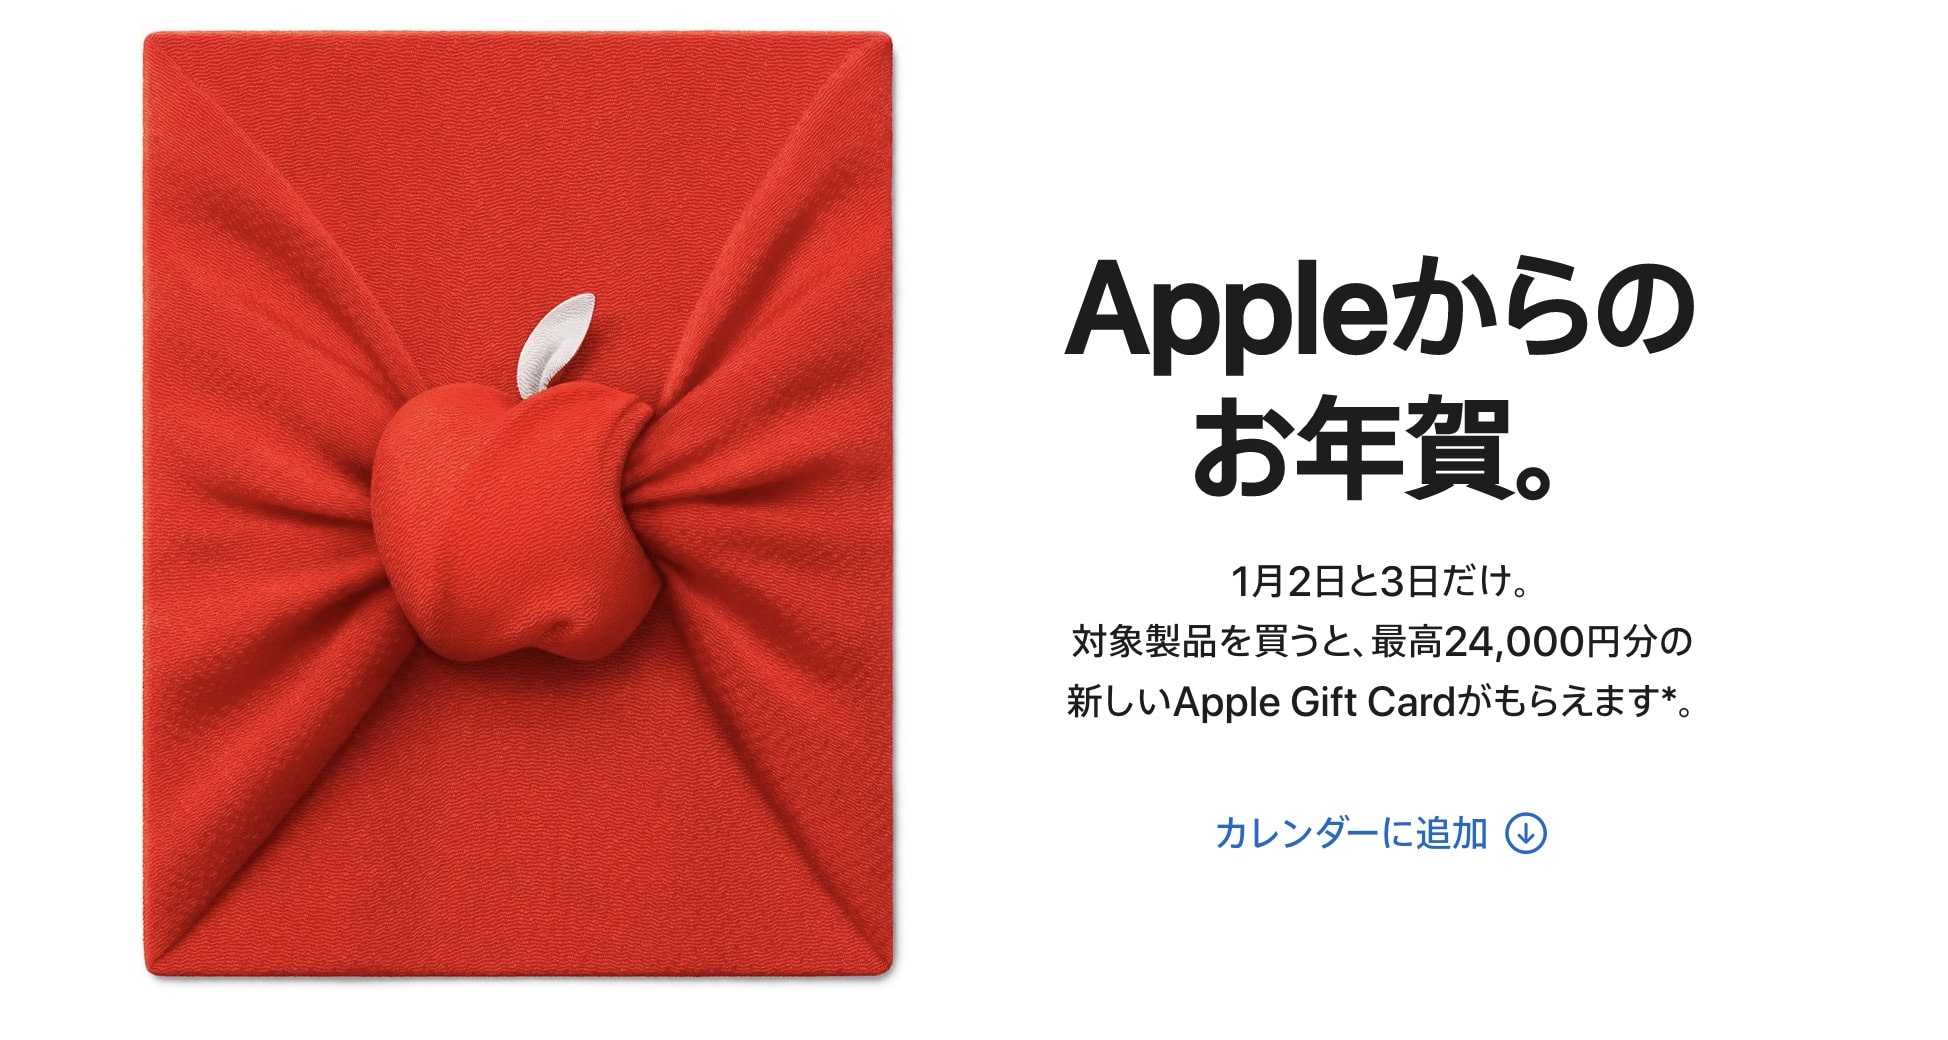 Apple Japanese New Year Promotion